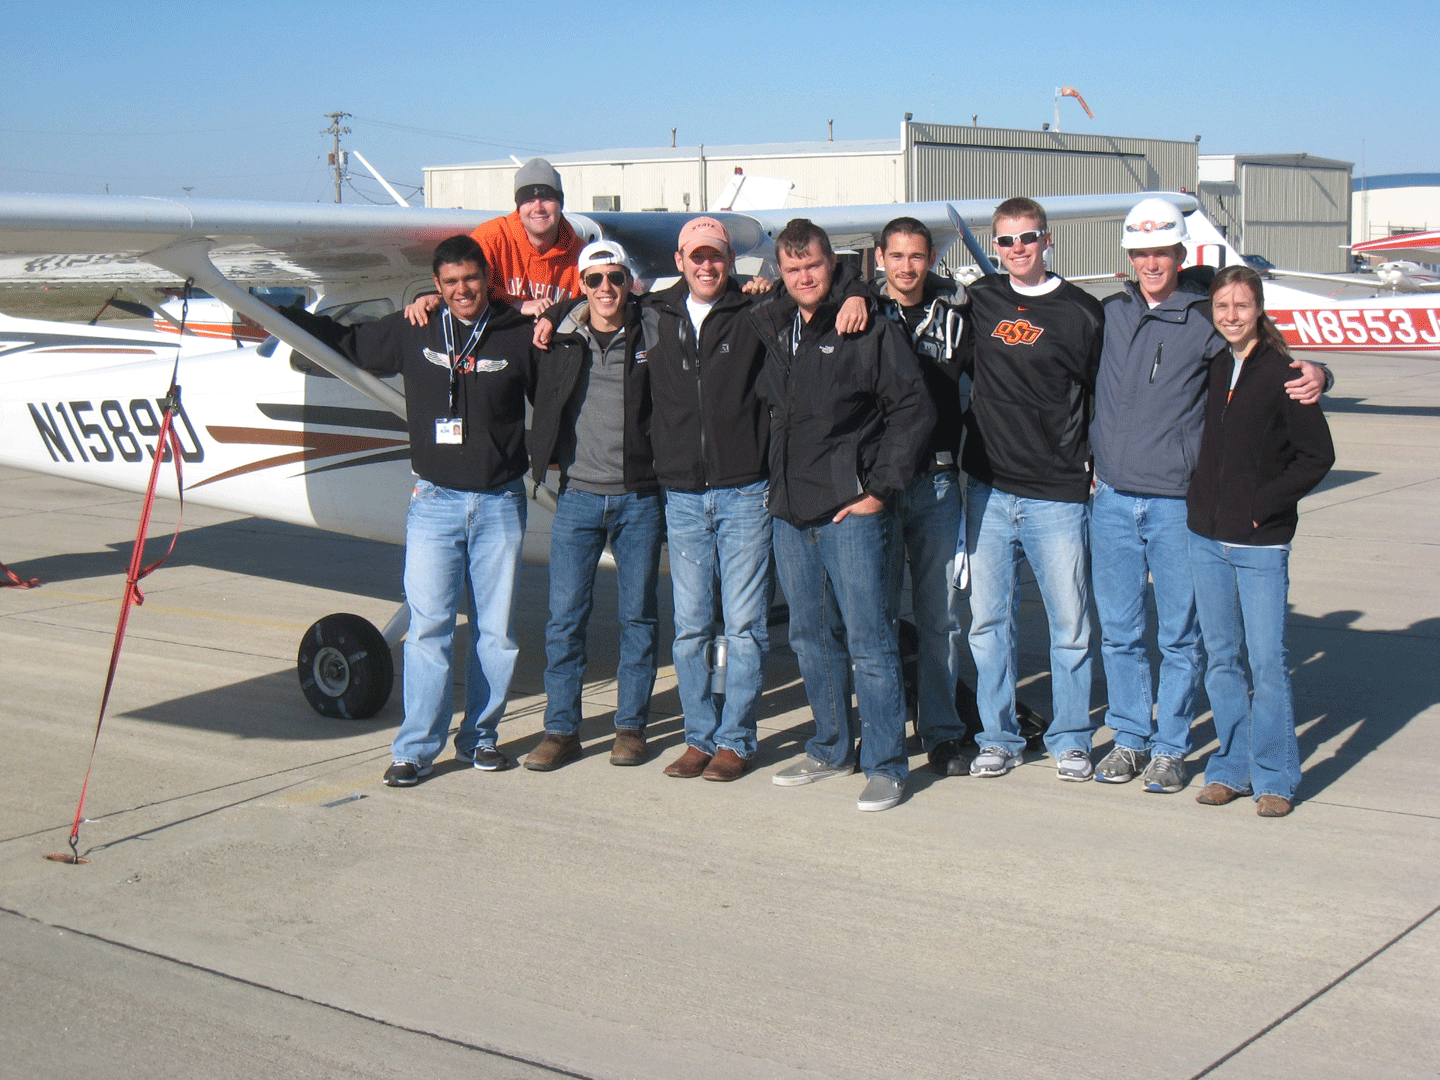 OSU Flying Aggie Flight Team members include (l-r) Jay Maldonado, Max Ringo, Jared Jacobs, Taylor Wilson, Ben Wilson, Ryan Lawler, Michael Parisi, Jake Akin, Hannah Schlesinger.